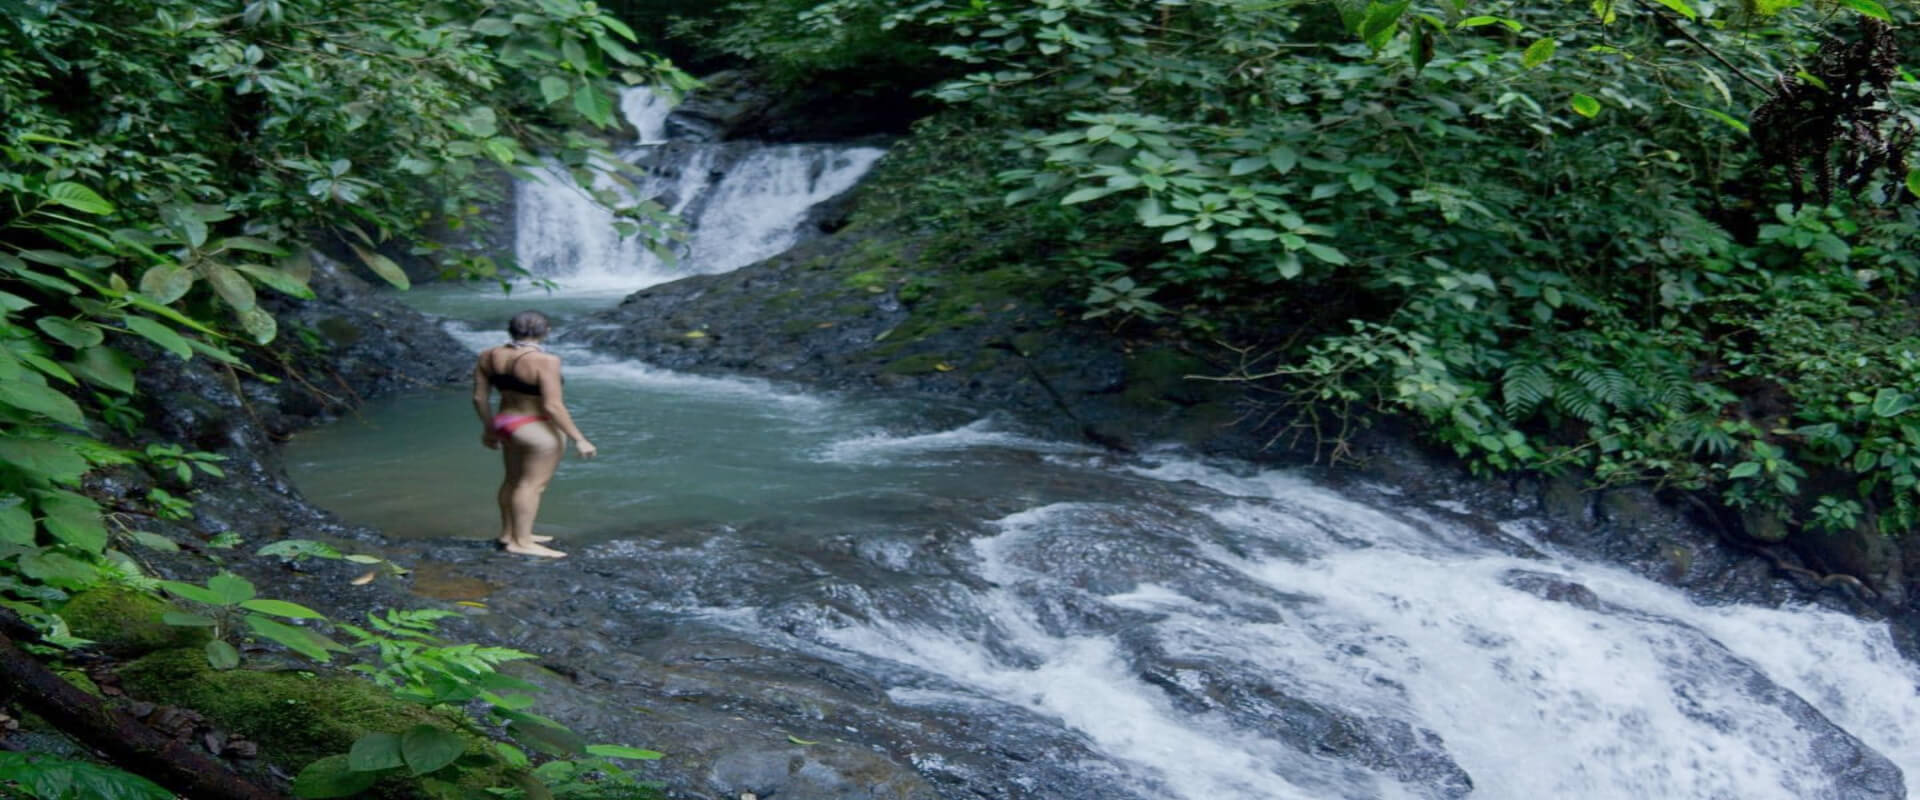 The Explorer Waterfalls Adventure | Costa Rica Jade Tours